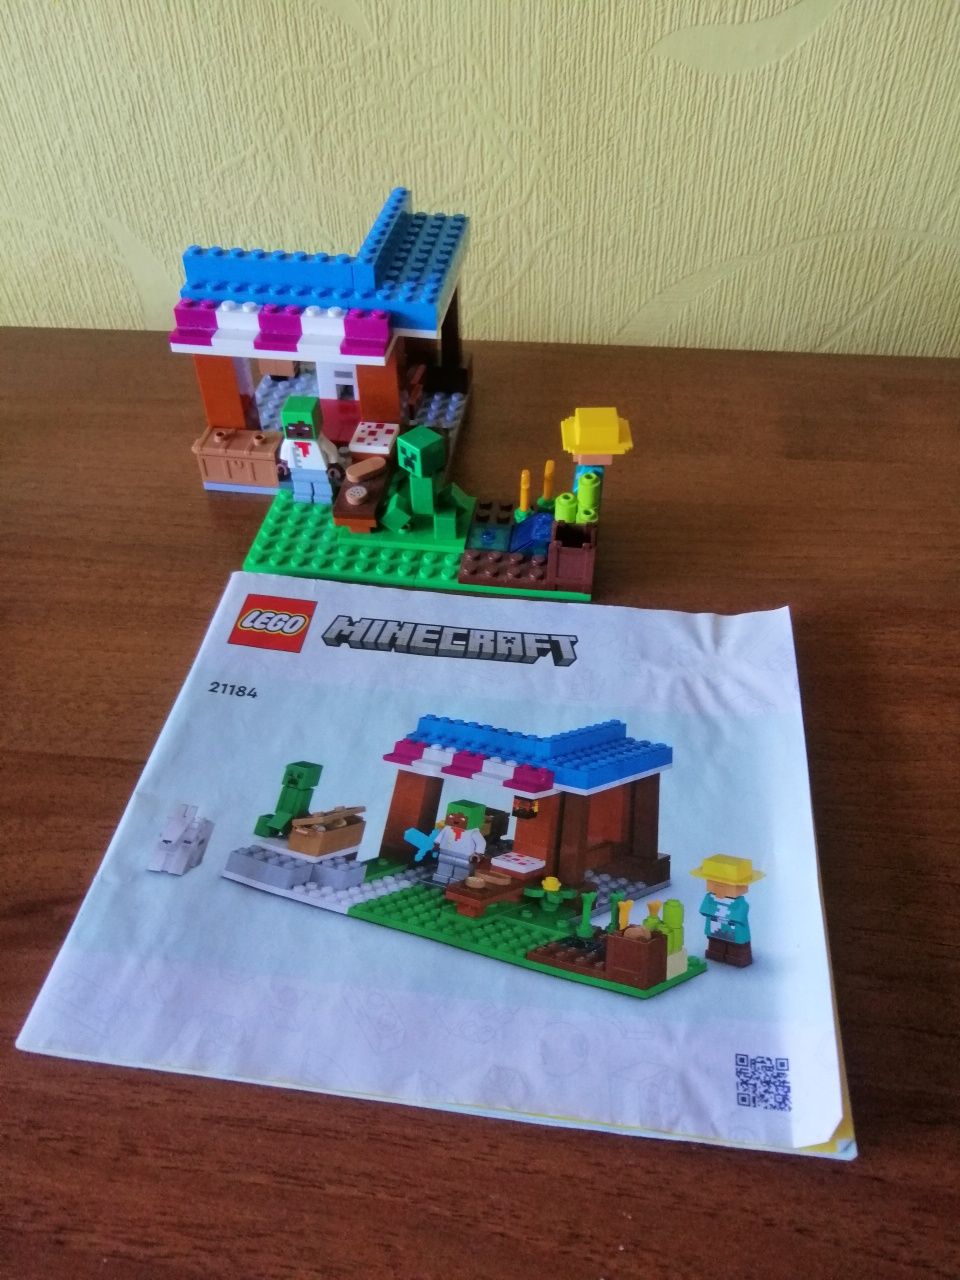 Lego Minecraft piekarnia 21184